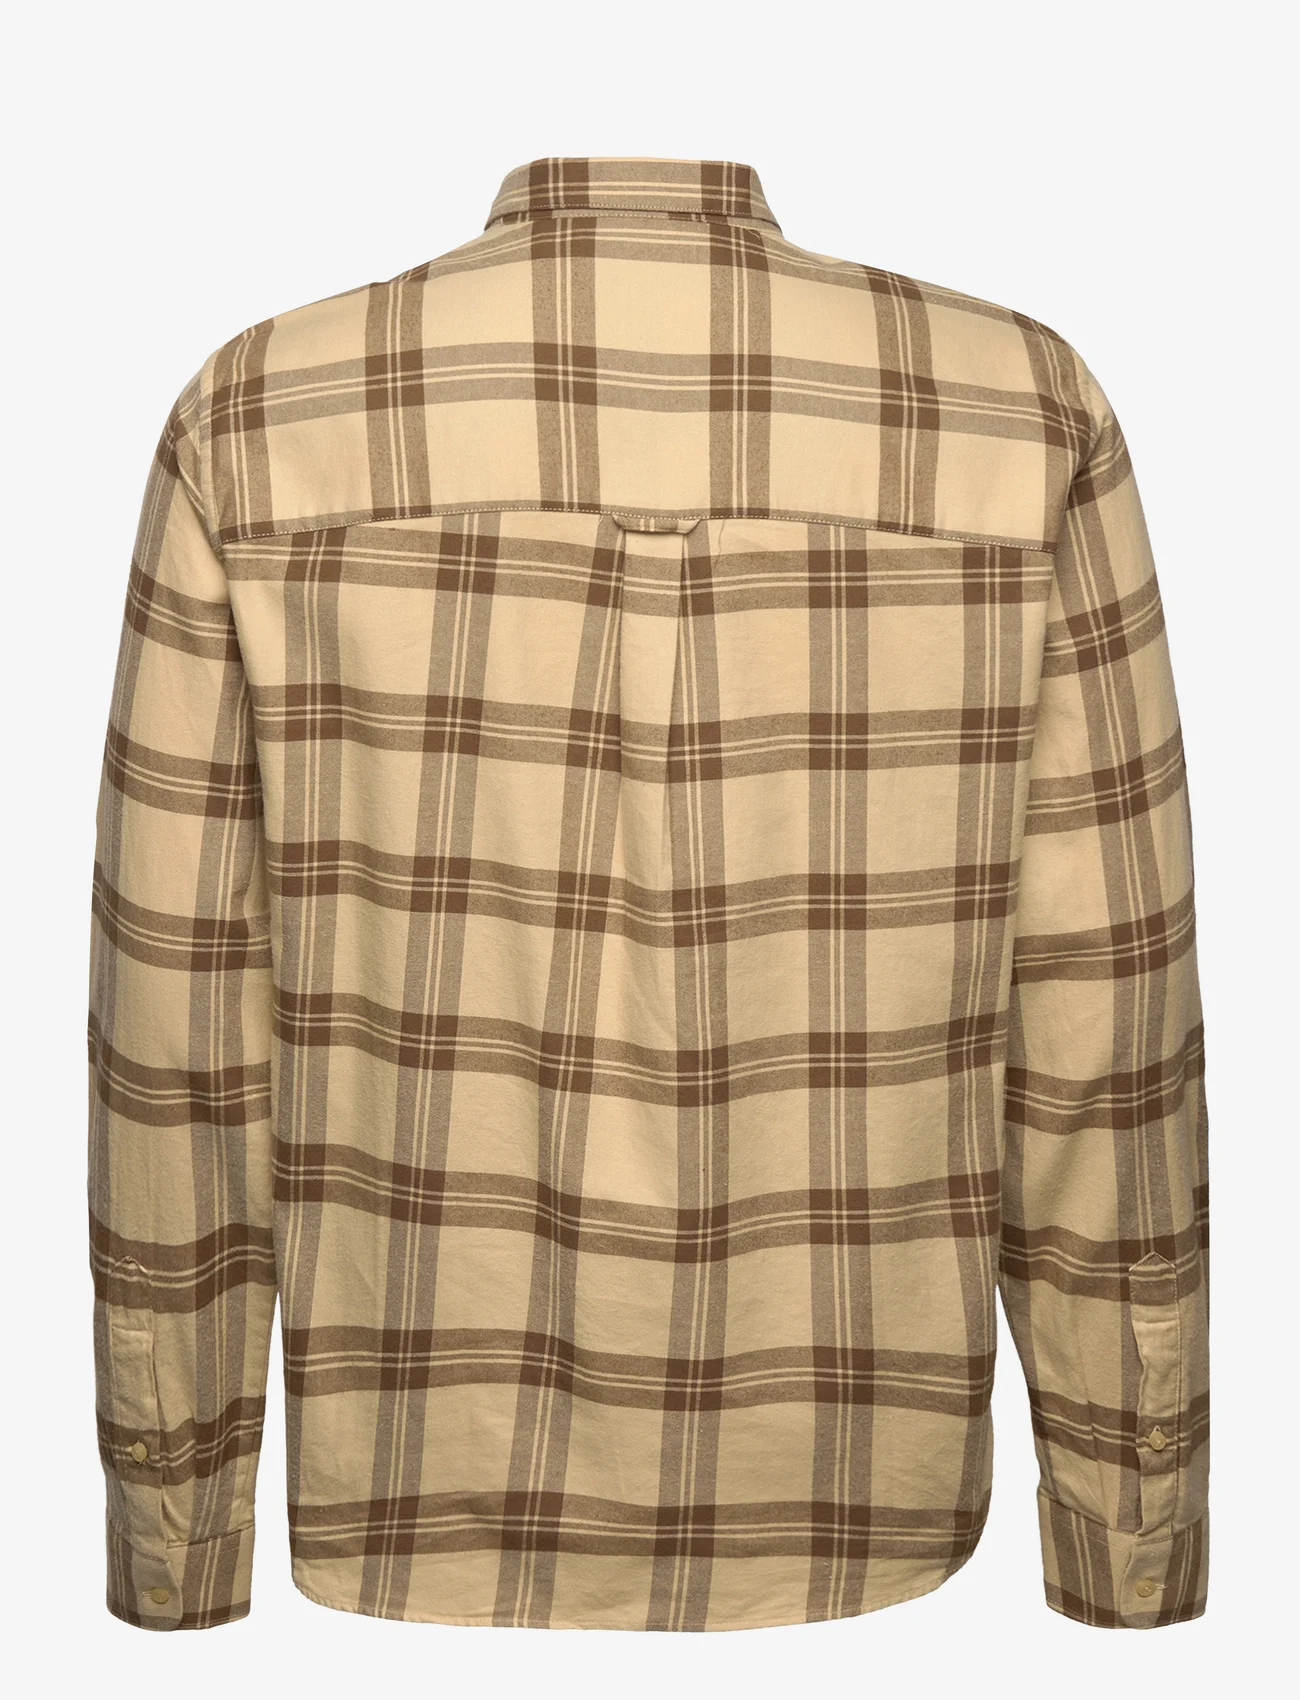 Peak Performance - M Moment Flannel Shirt-143 CHECK - geruite overhemden - 143 check - 1